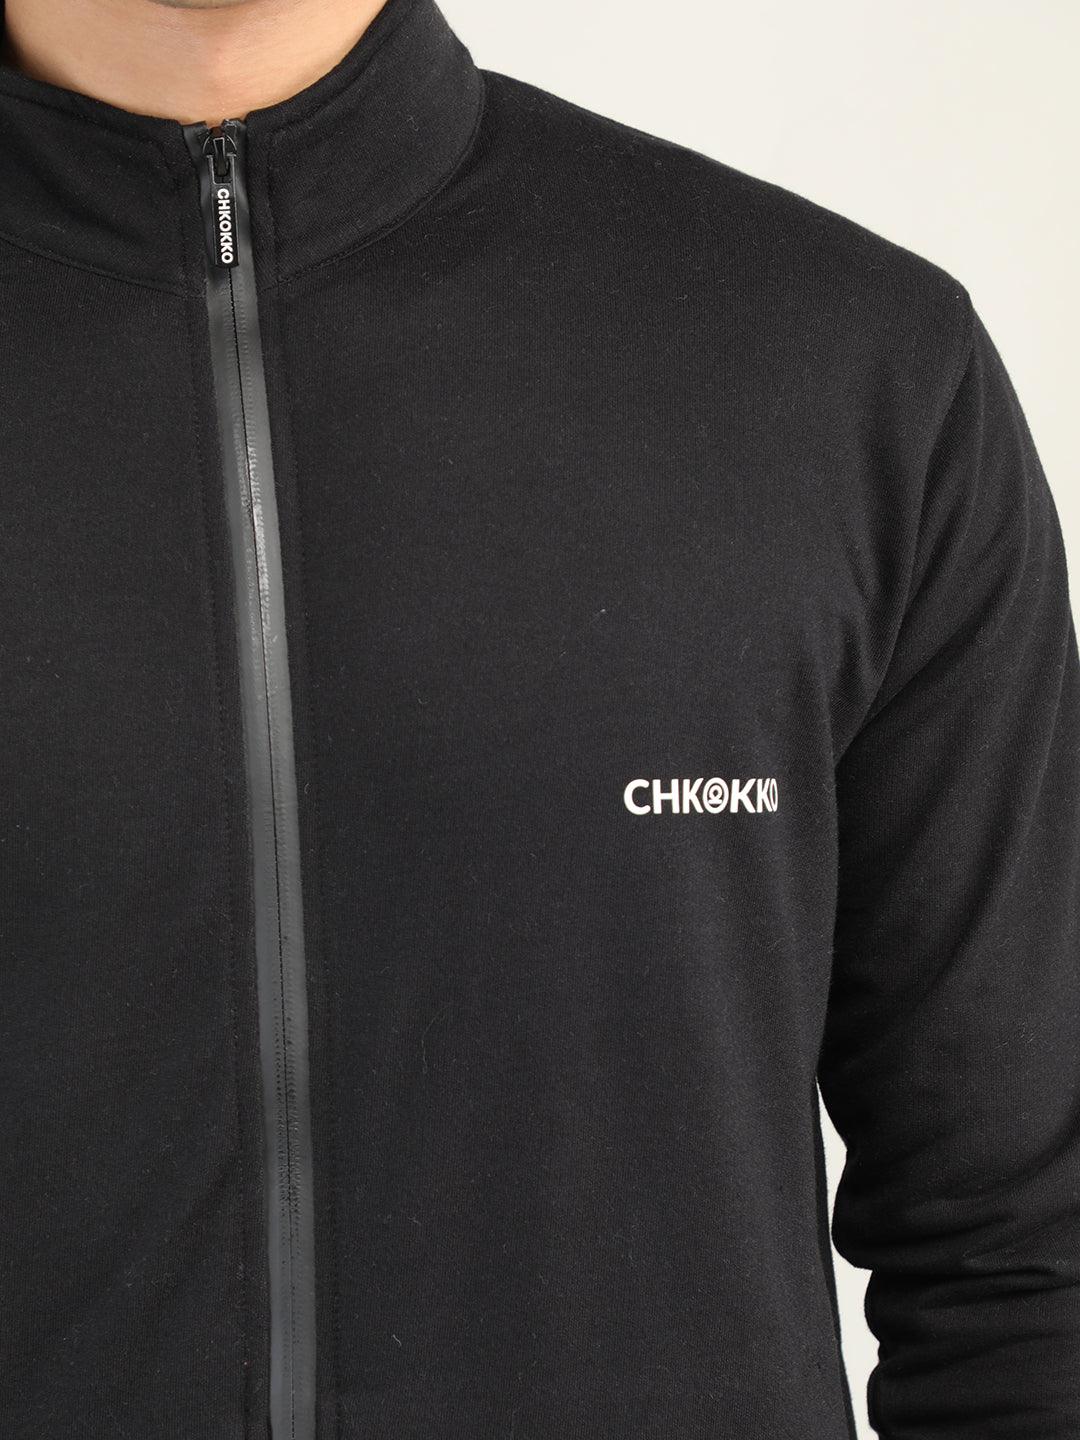 Men Anthra Zipper Jacket | CHKOKKO - Chkokko